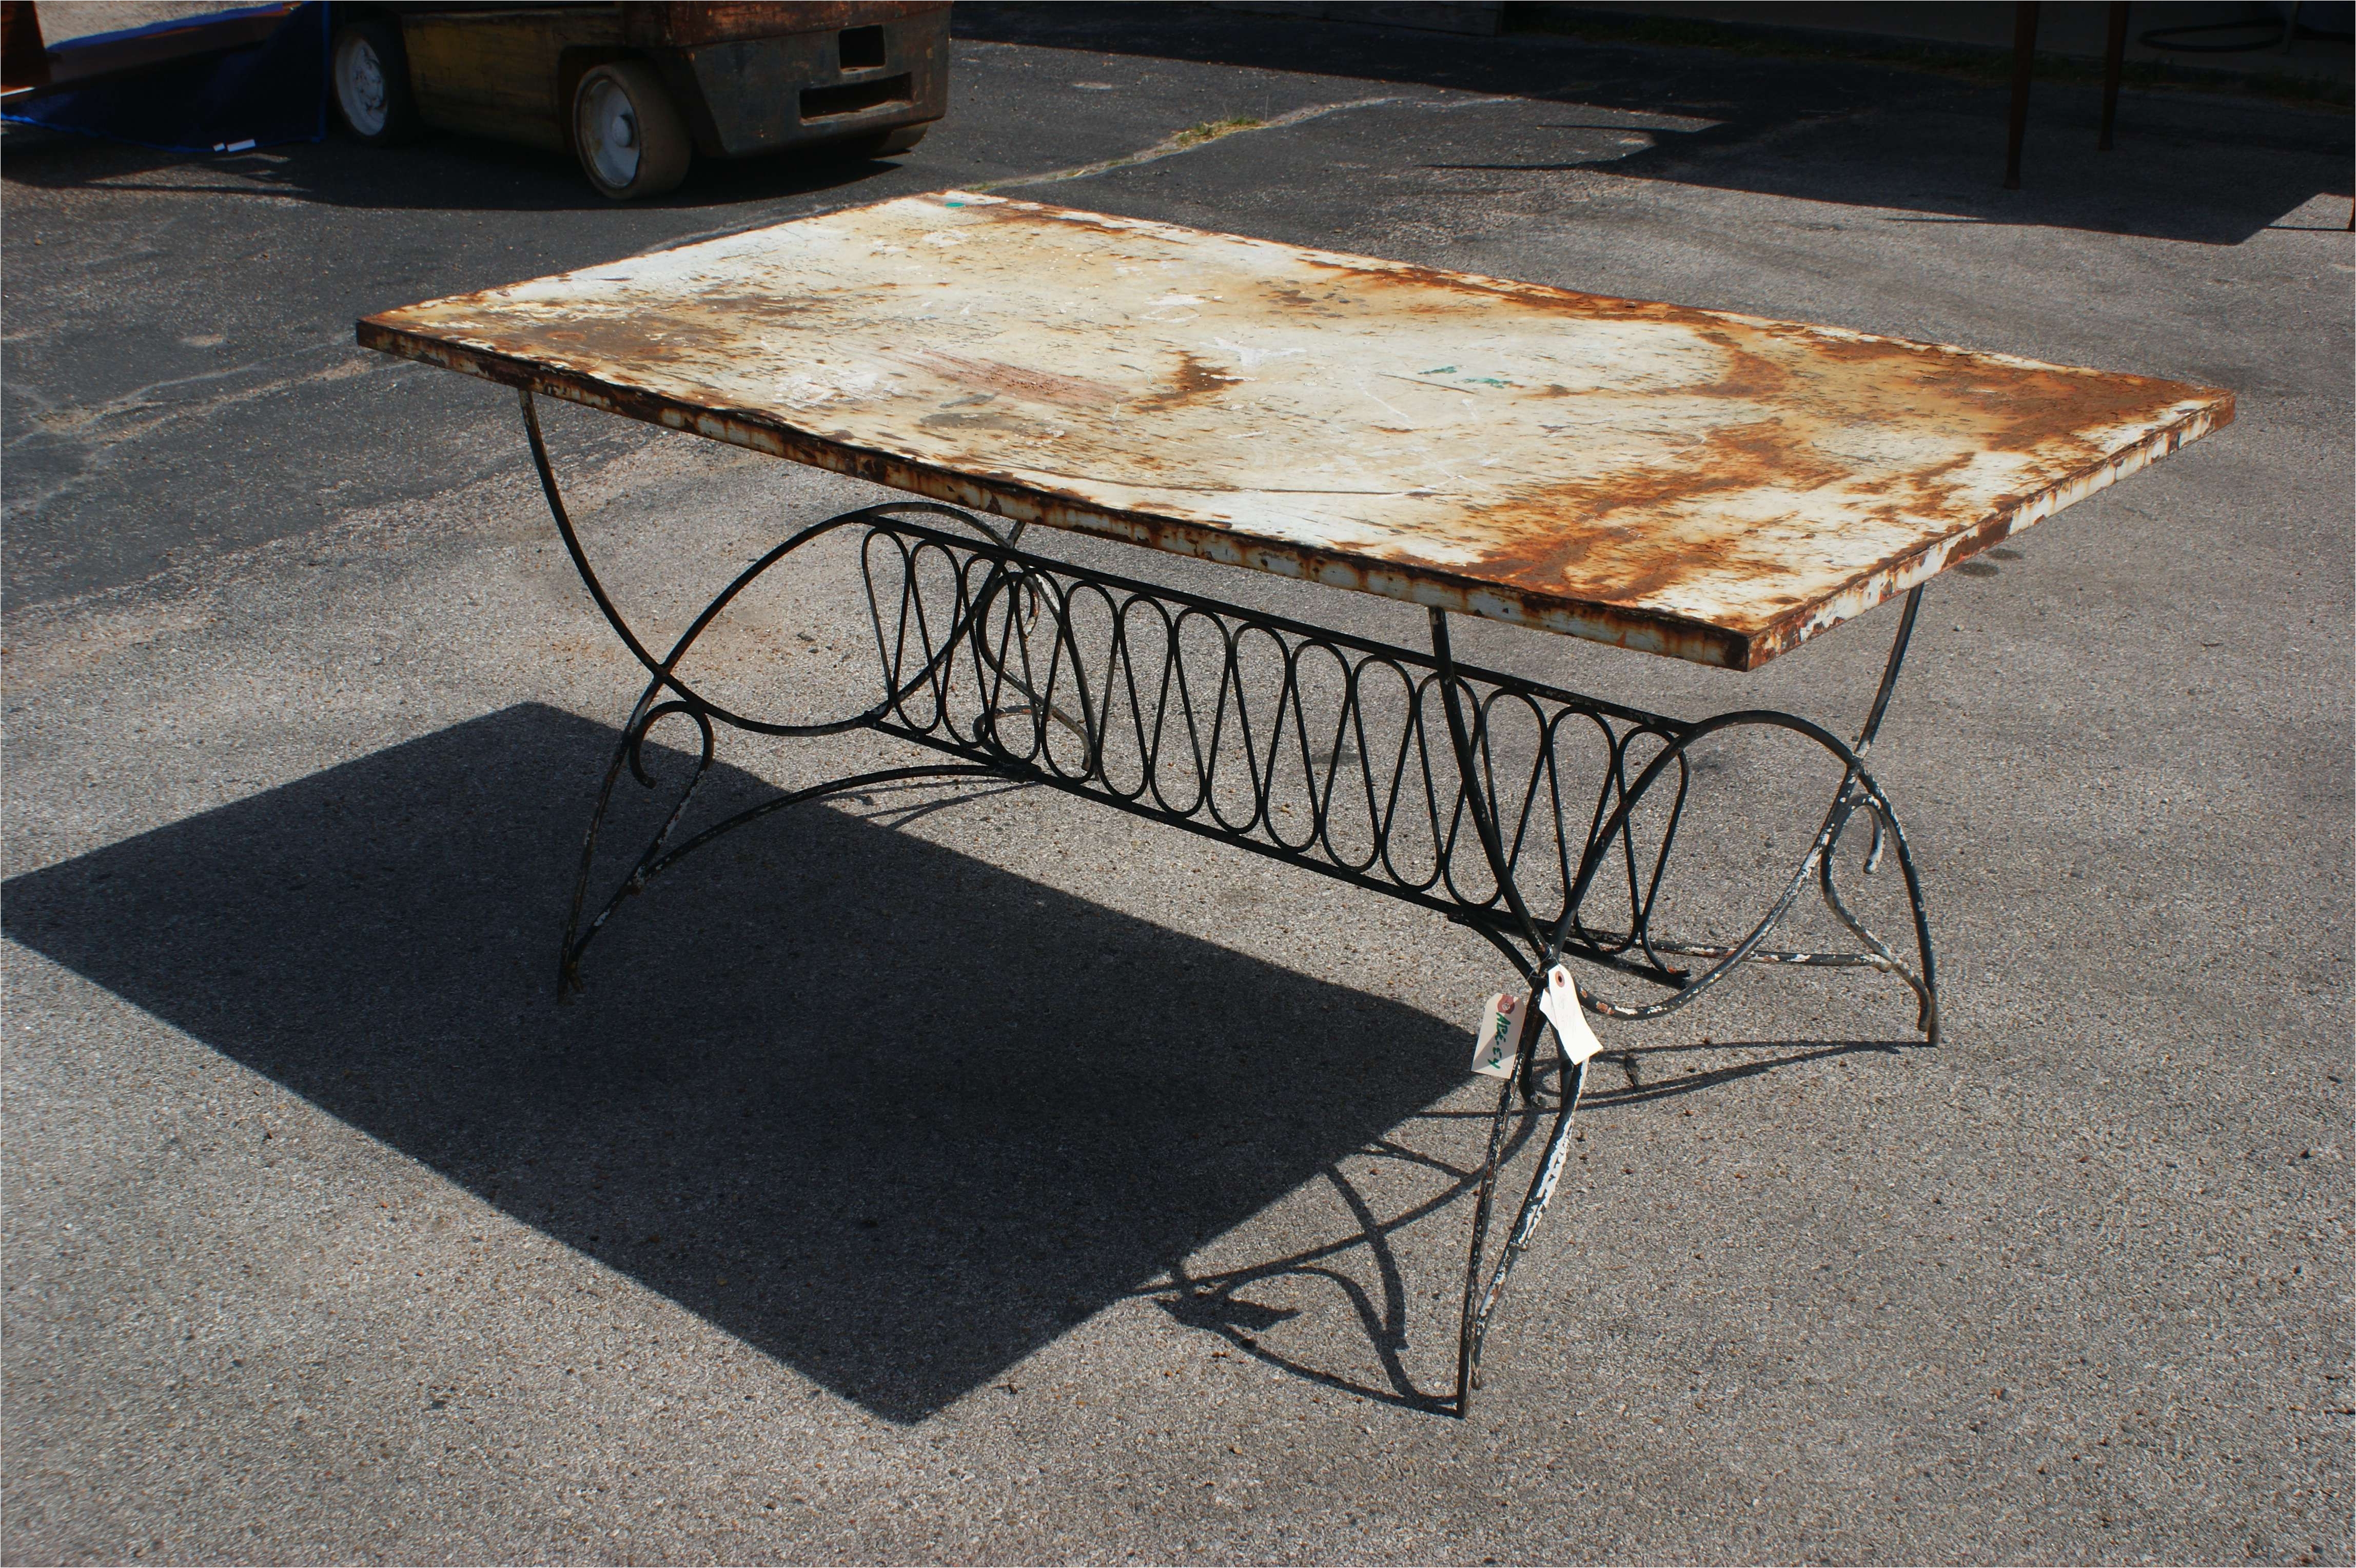 2×4 Patio Furniture Plans 2a4 Outdoor Furniture Plans Metal Patio Tableca Round Outdoor Table